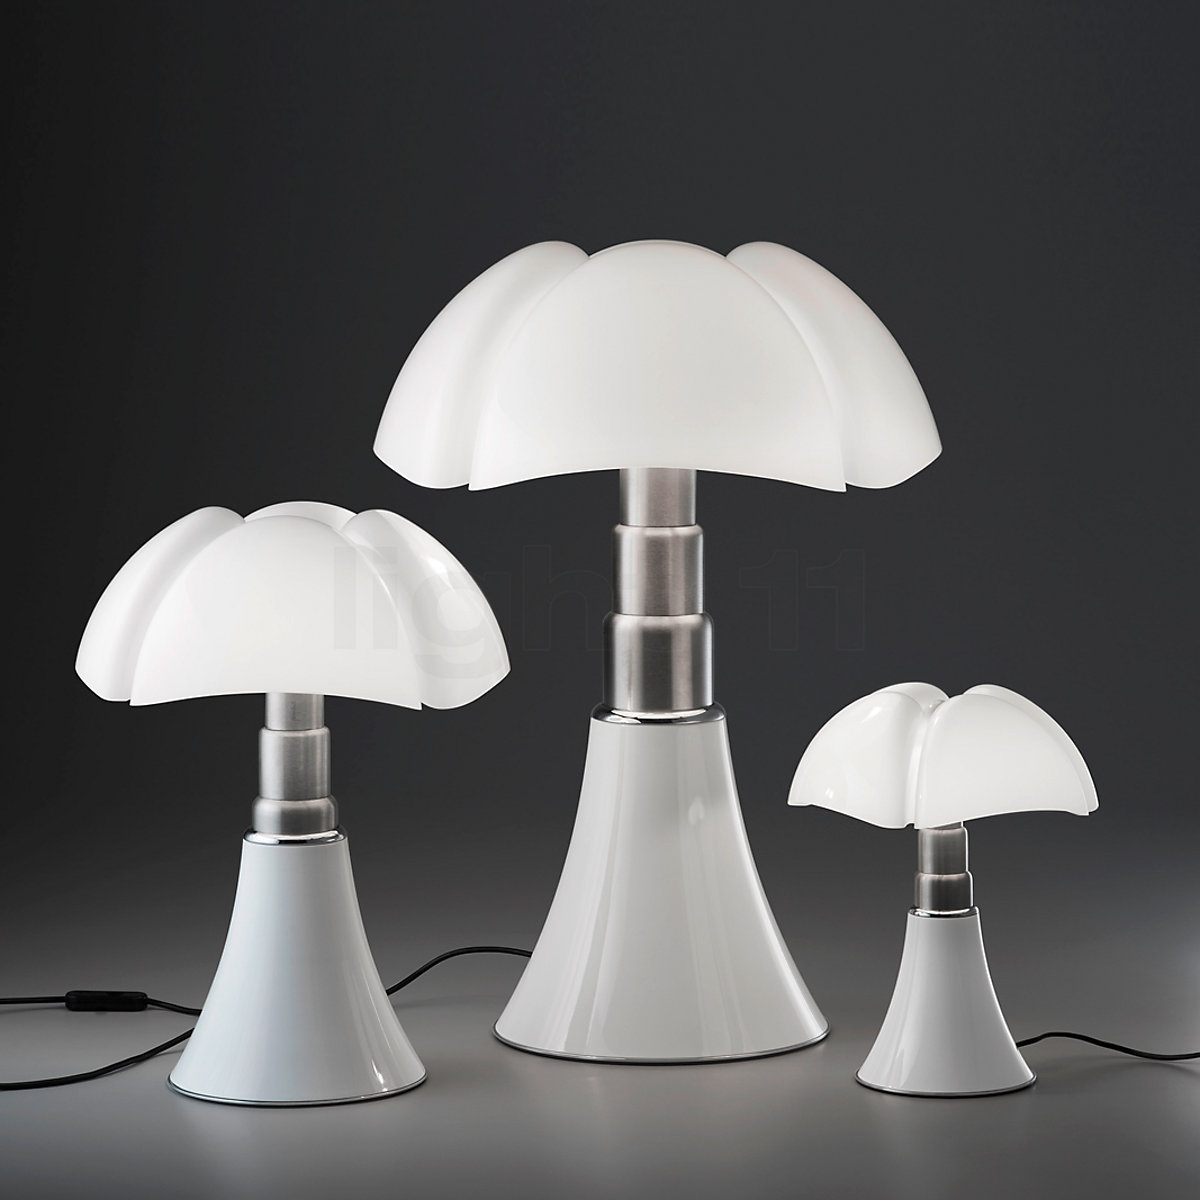 Buy Martinelli Luce Pipistrello Table lamp at